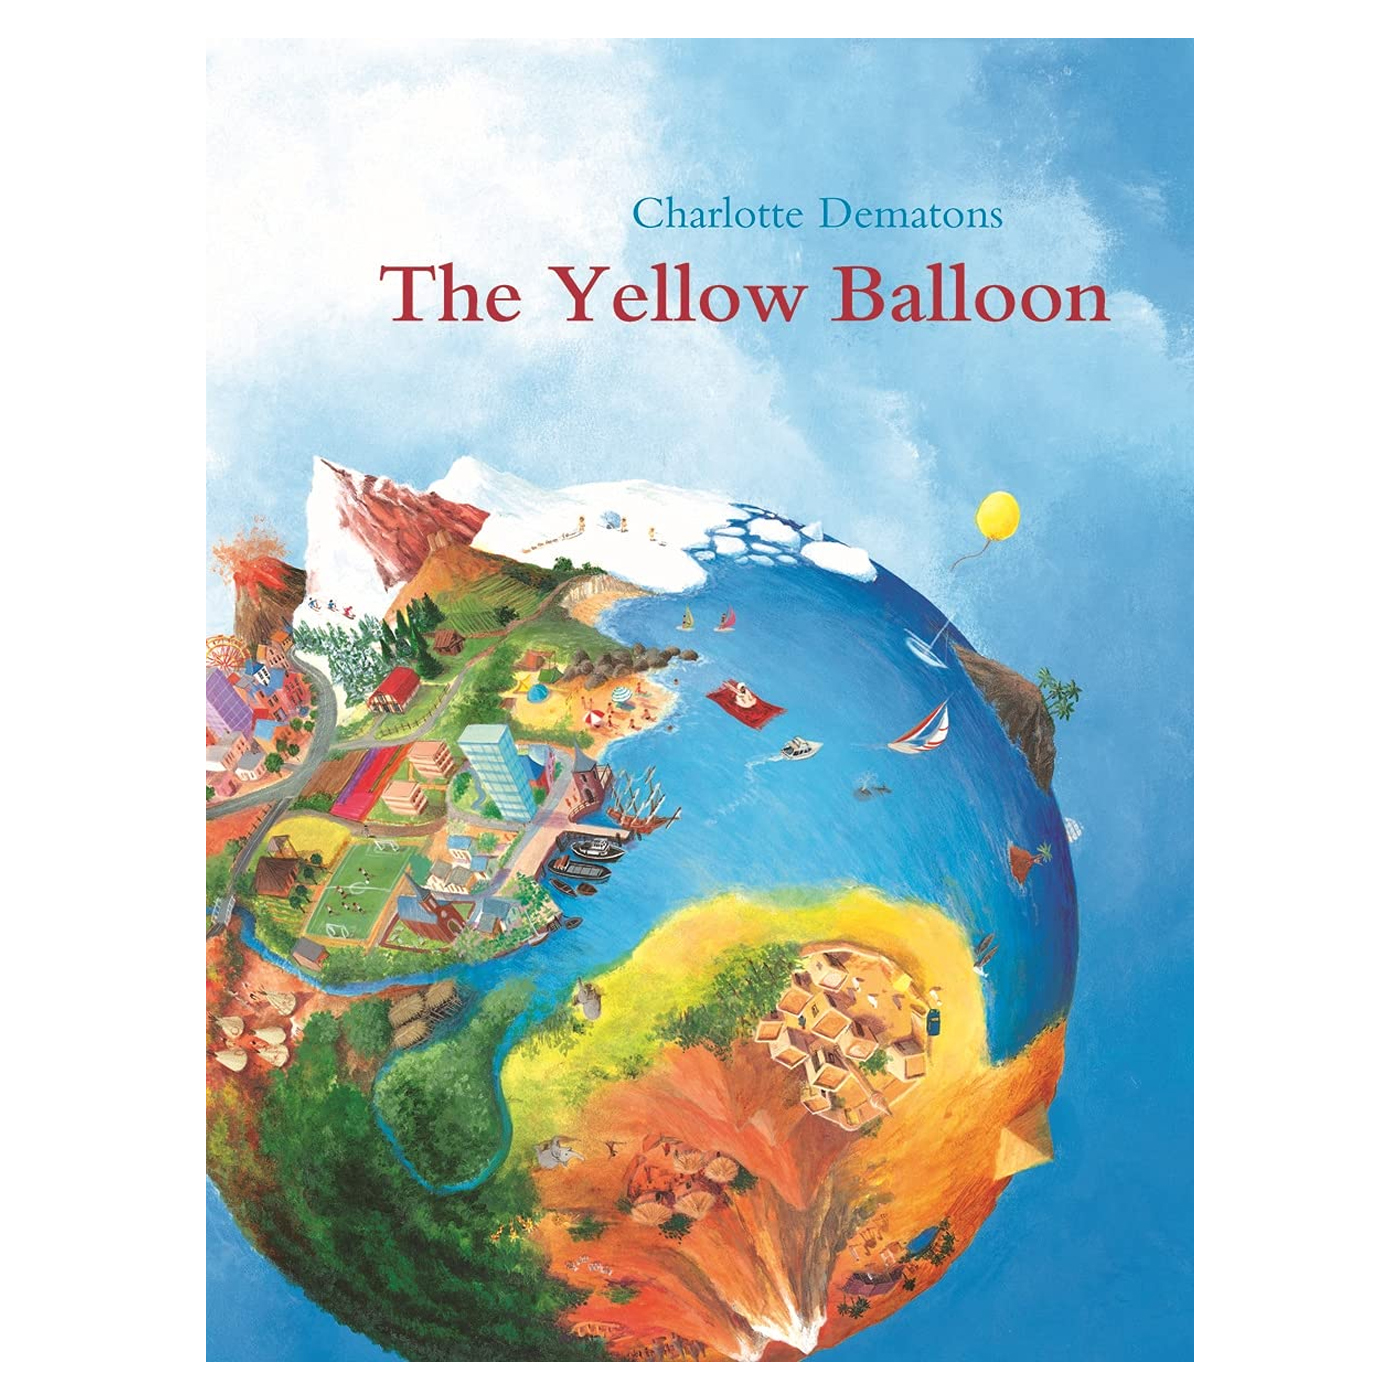  The Yellow Balloon